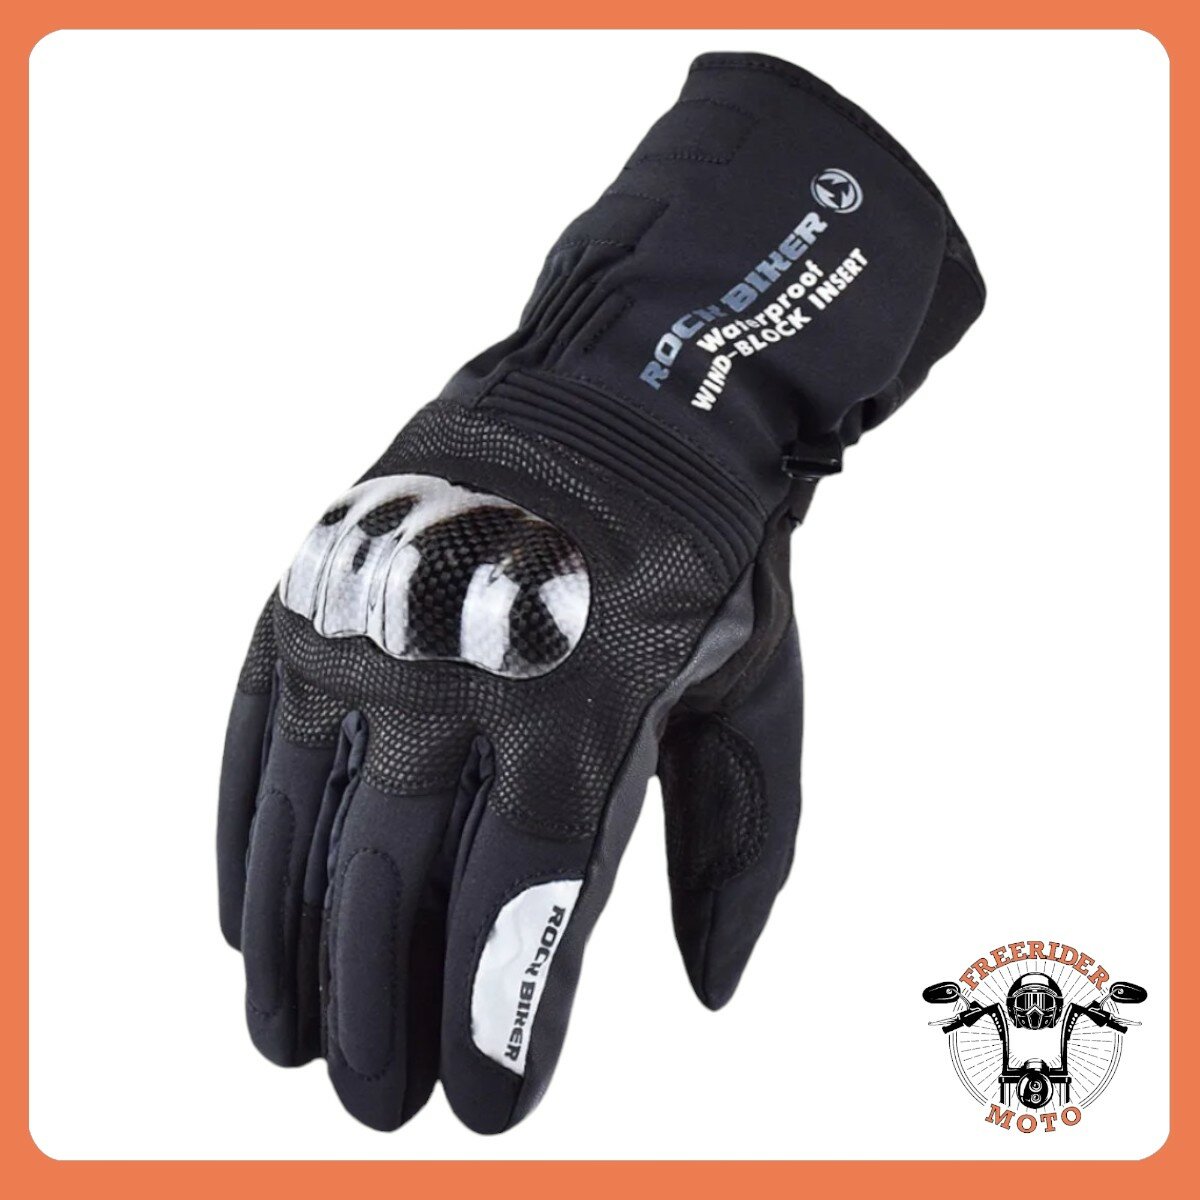 Мотоперчатки перчатки теплые Rock Biker RBG-32 для мотоциклиста на мотоцикл скутер мопед квадроцикл снегоход черные XL